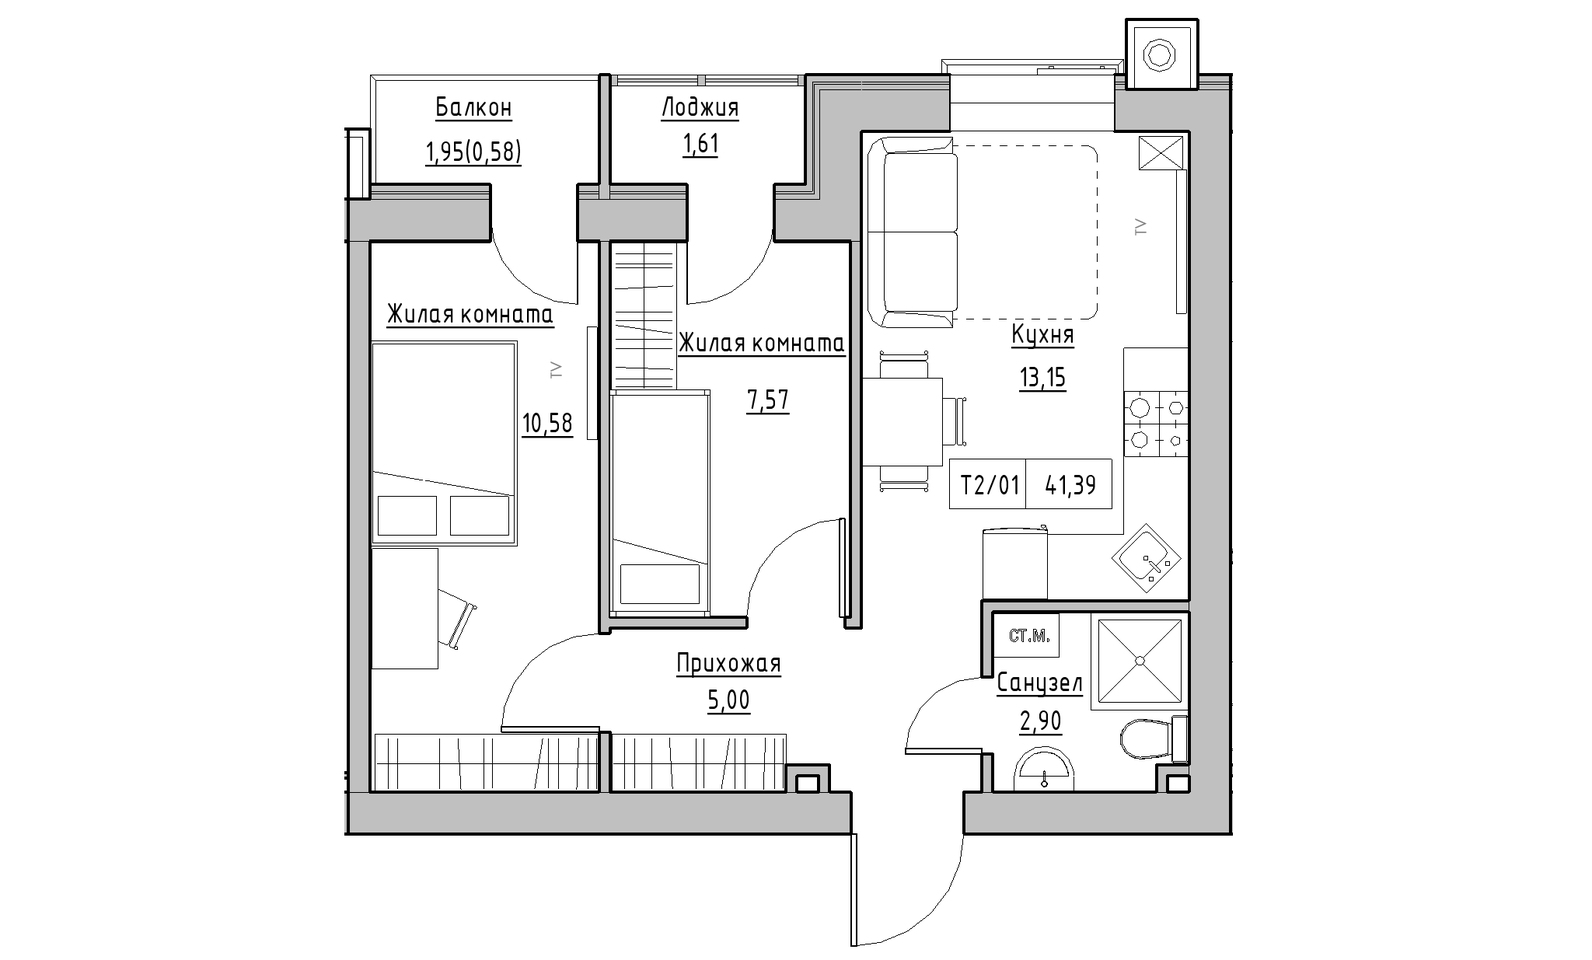 Planning 2-rm flats area 41.39m2, KS-014-03/0005.